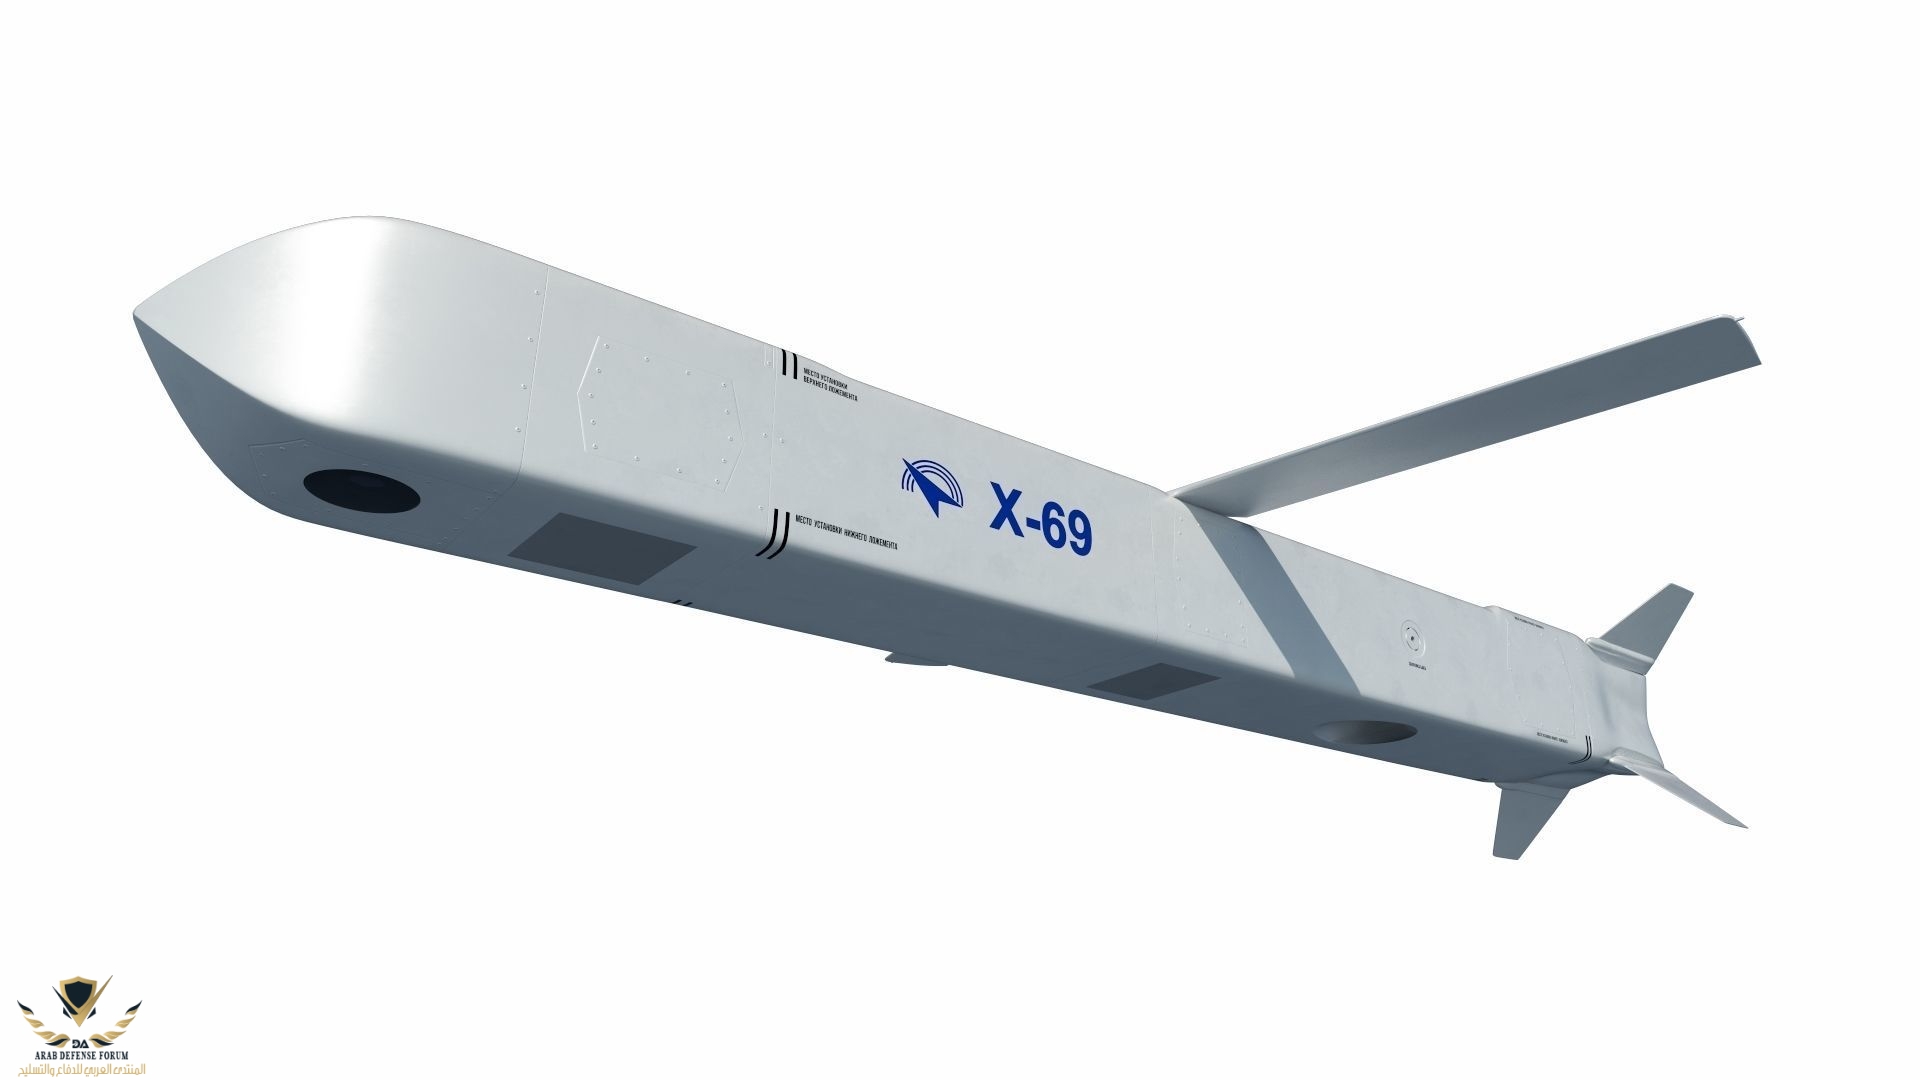 kh-69-x-69-stealth-cruise-missile-3d-model-76b902f51d.jpg